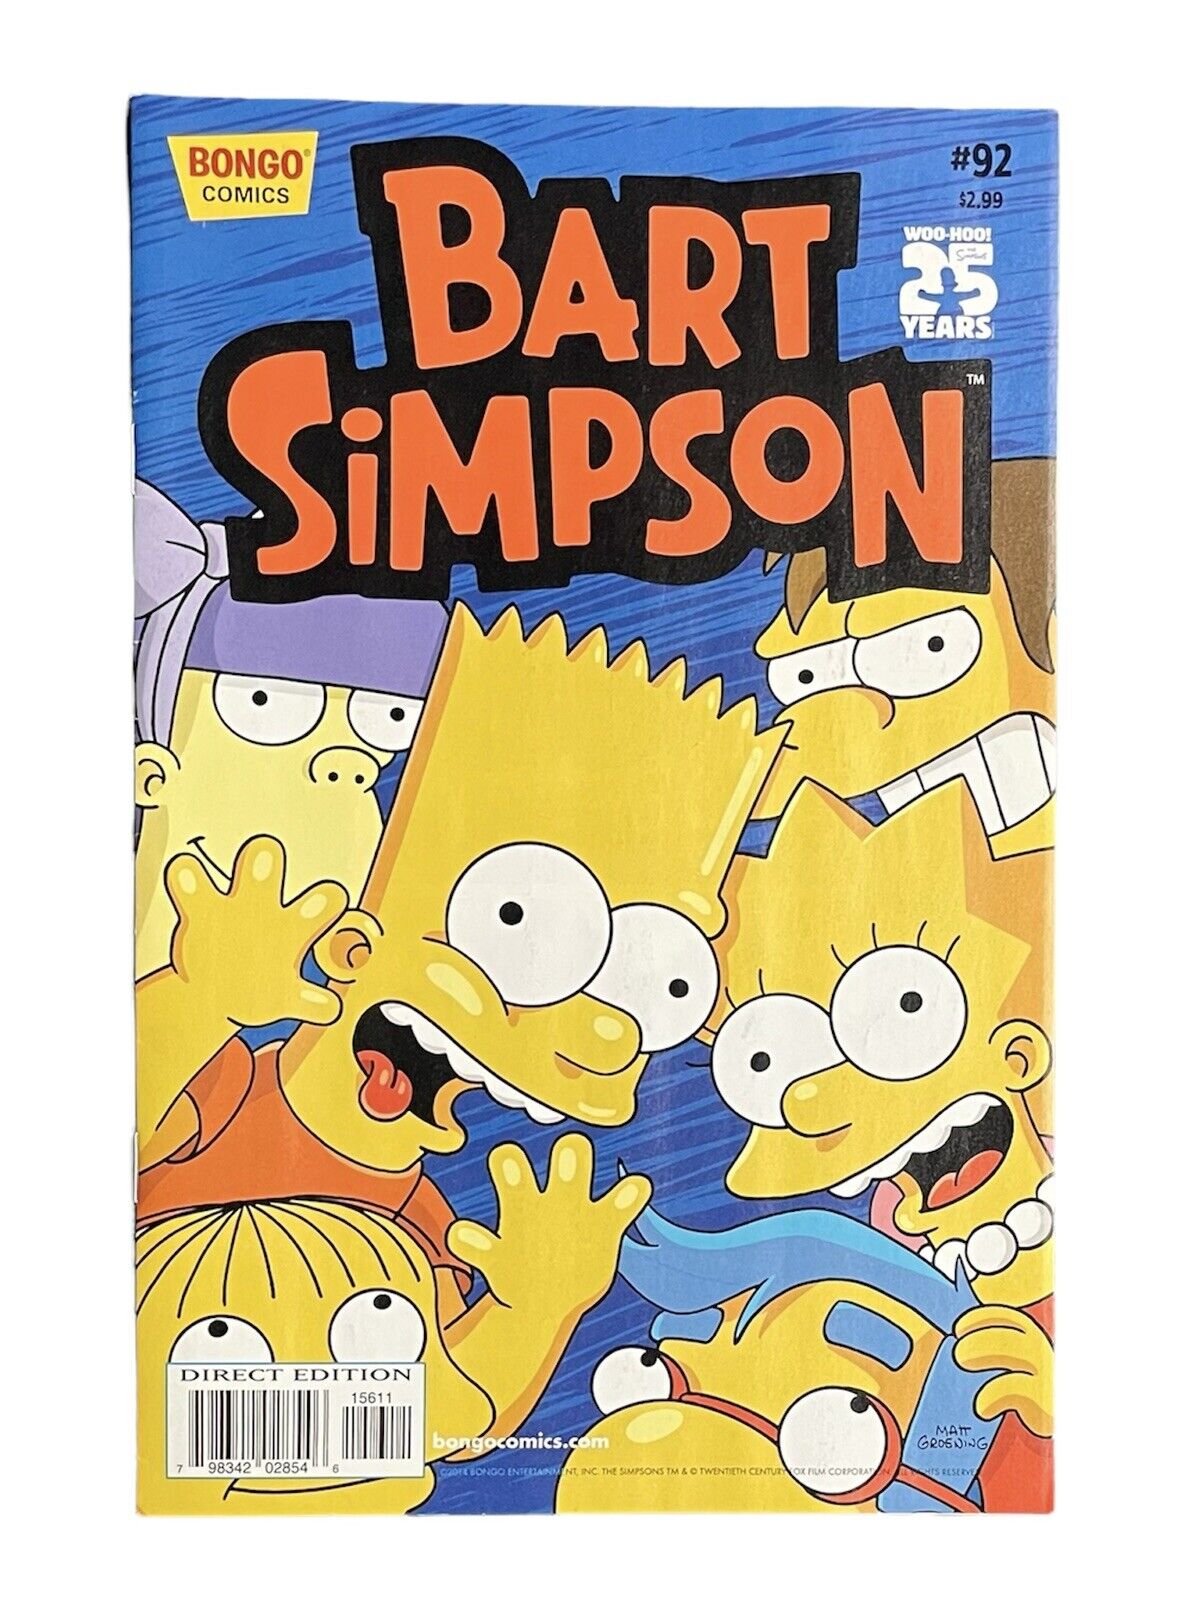 The Simpsons: Bart Simpson #92 Funny Comedic Bongo Comic Book